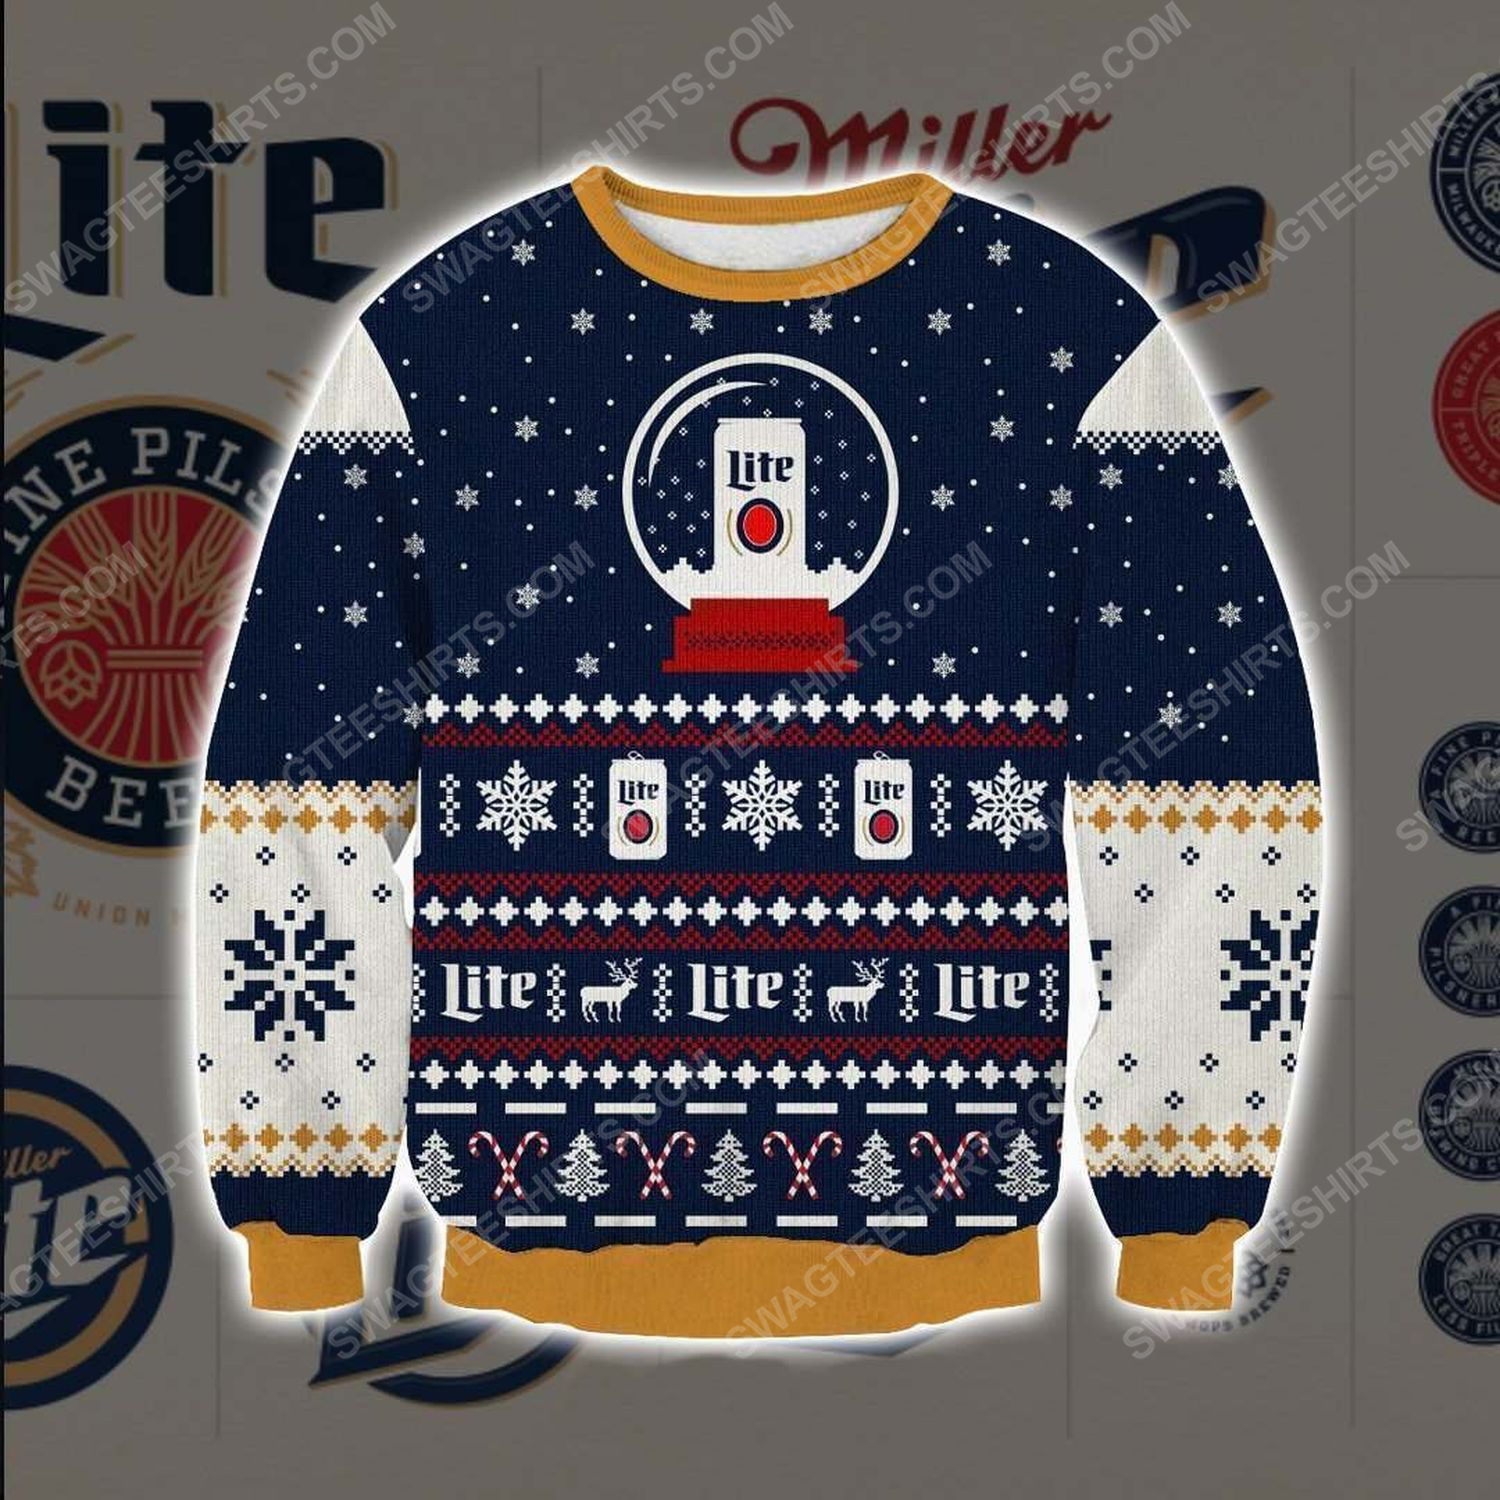 Miller lite reindeer ugly christmas sweater - Copy (2)